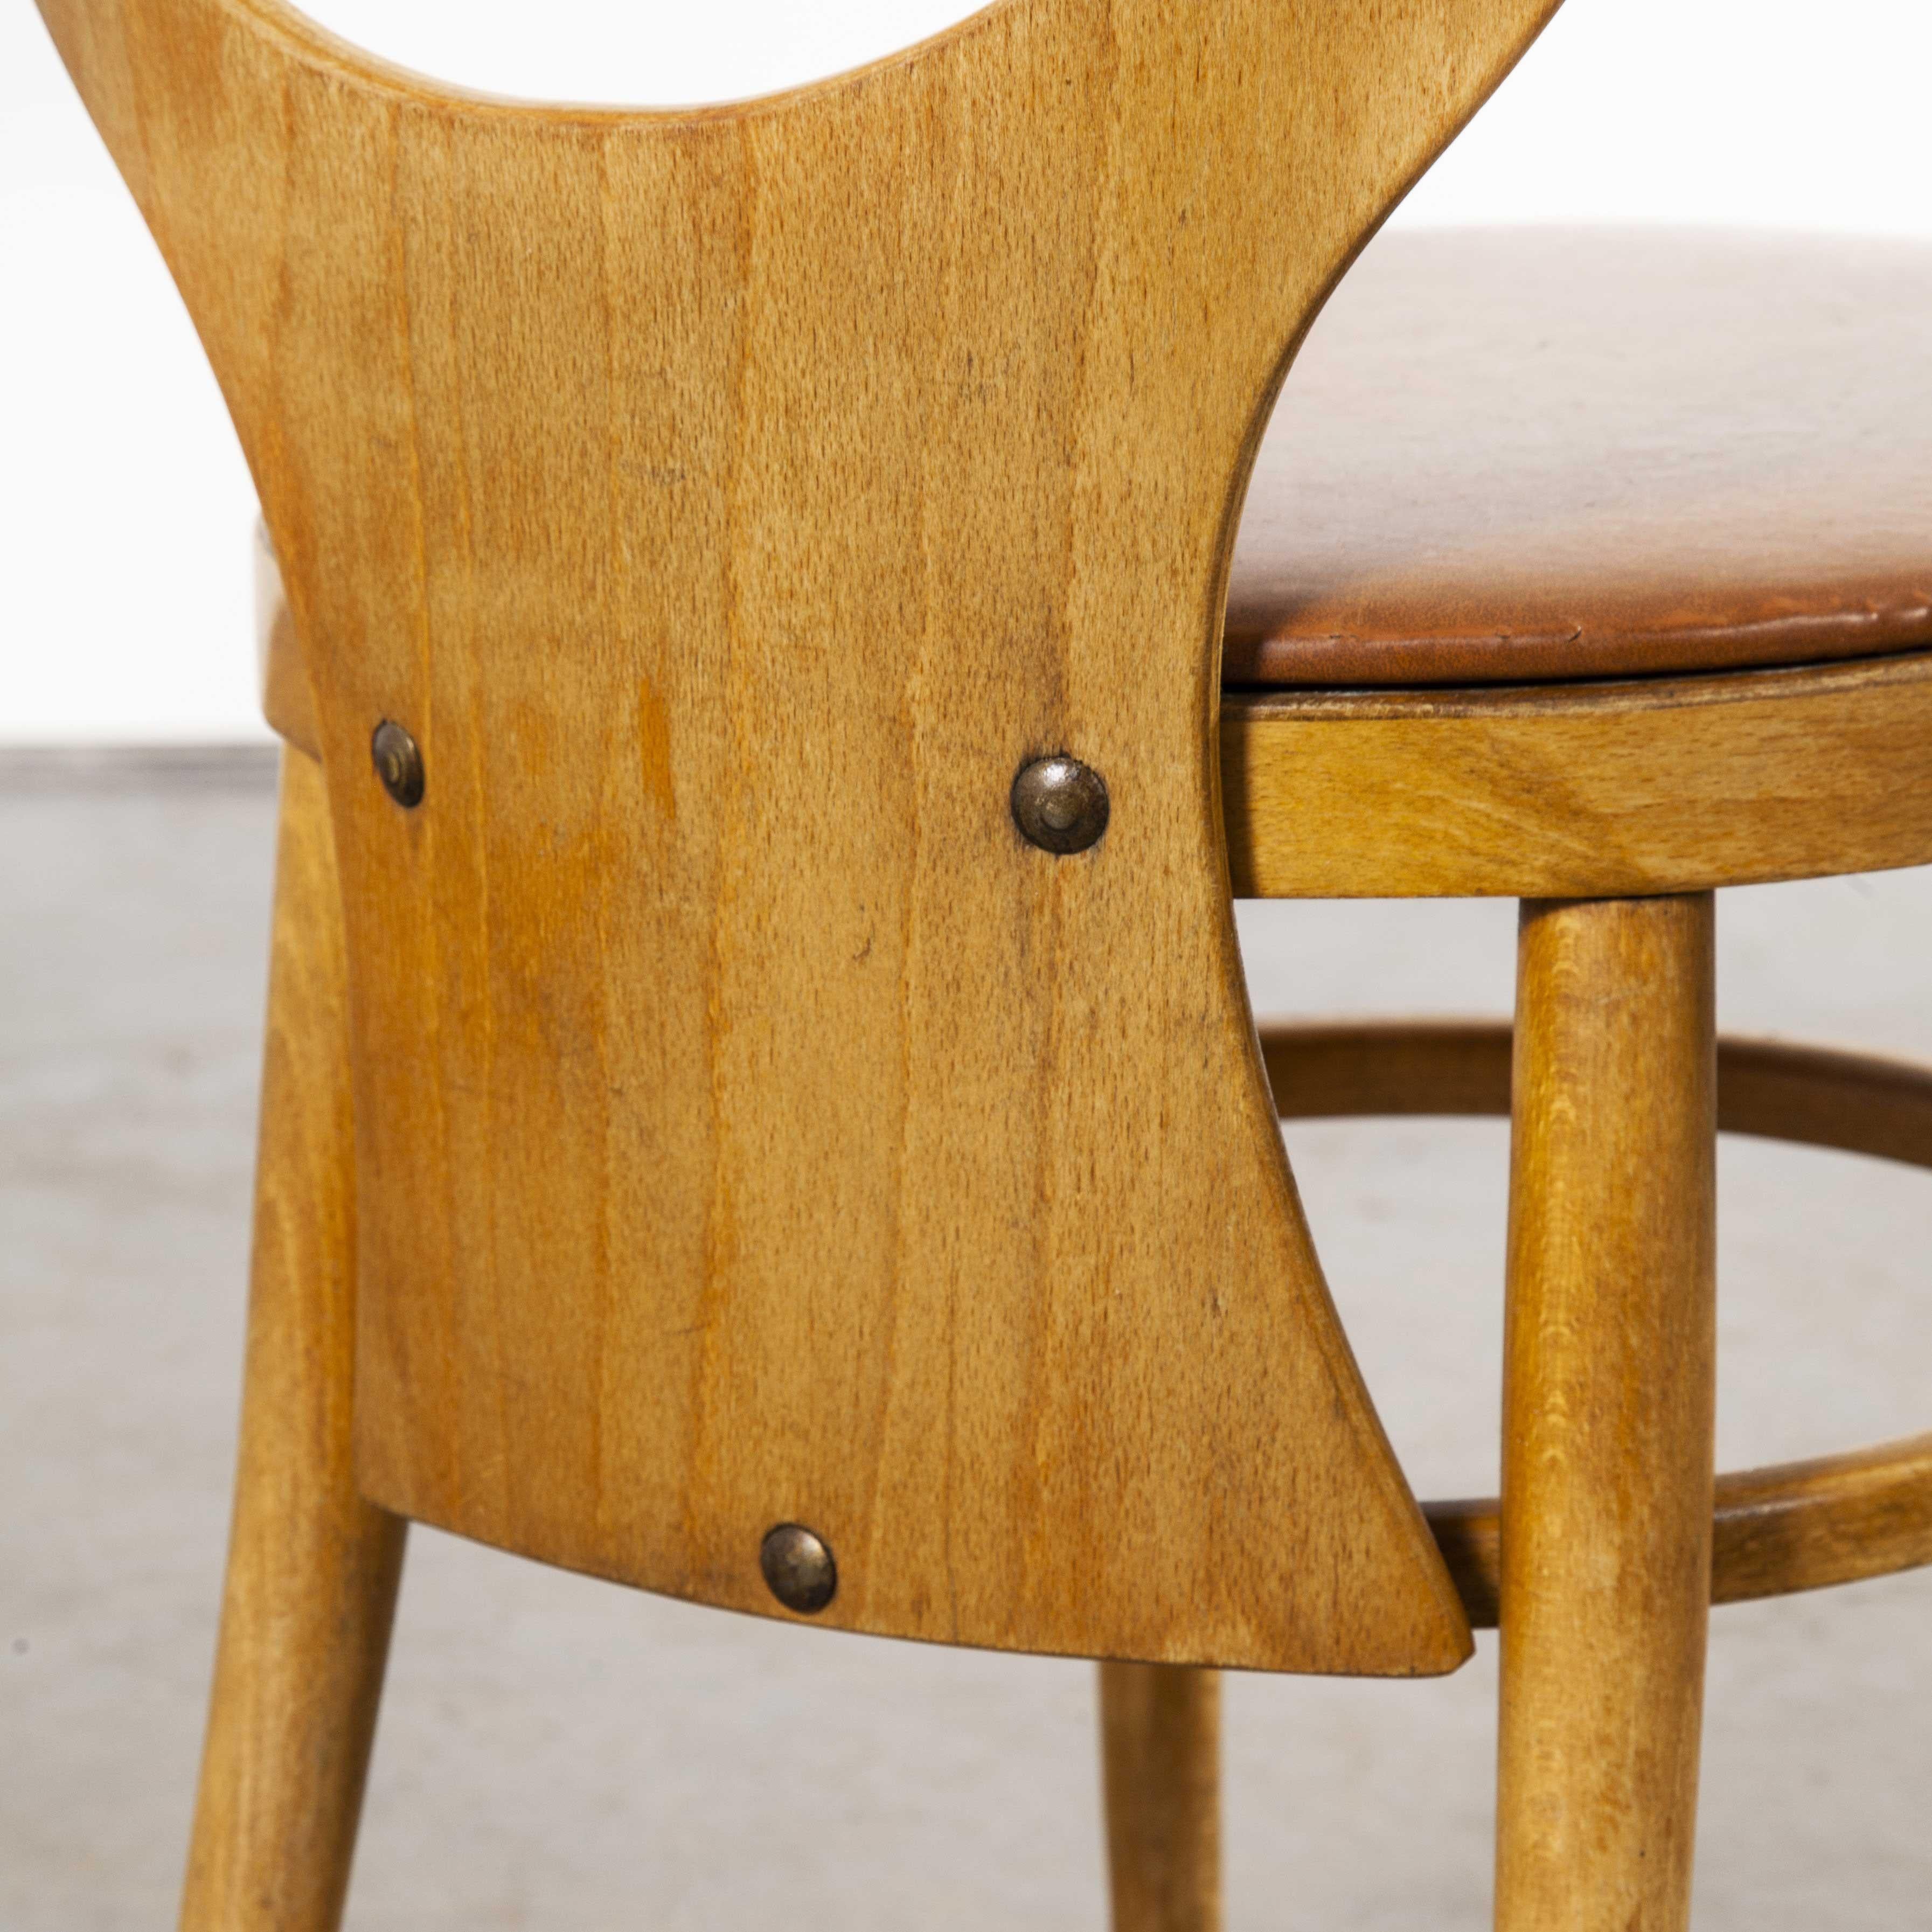 1960s Baumann dining chair – Mouette – Set of six upholstered seats

1960s Baumann dining chair – Mouette – Set of six upholstered seats. Made in France by the maker Joamin Baumann. Baumann is a slightly off the radar French producer just starting